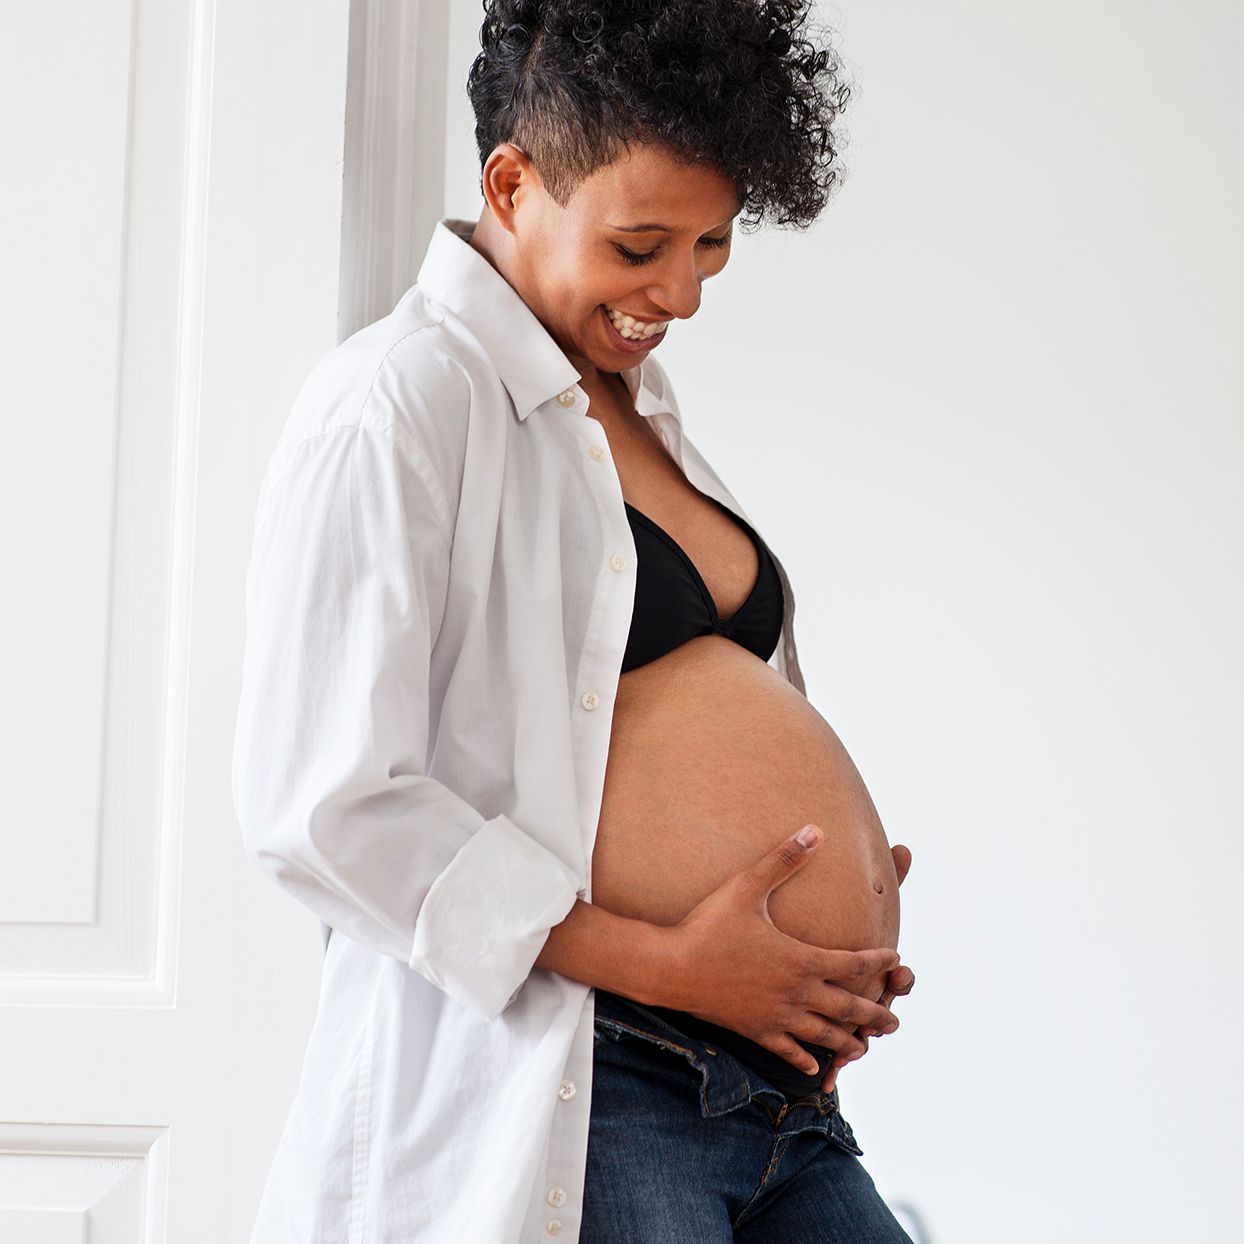 Traditional Surrogacy vs Gestational Surrogacy